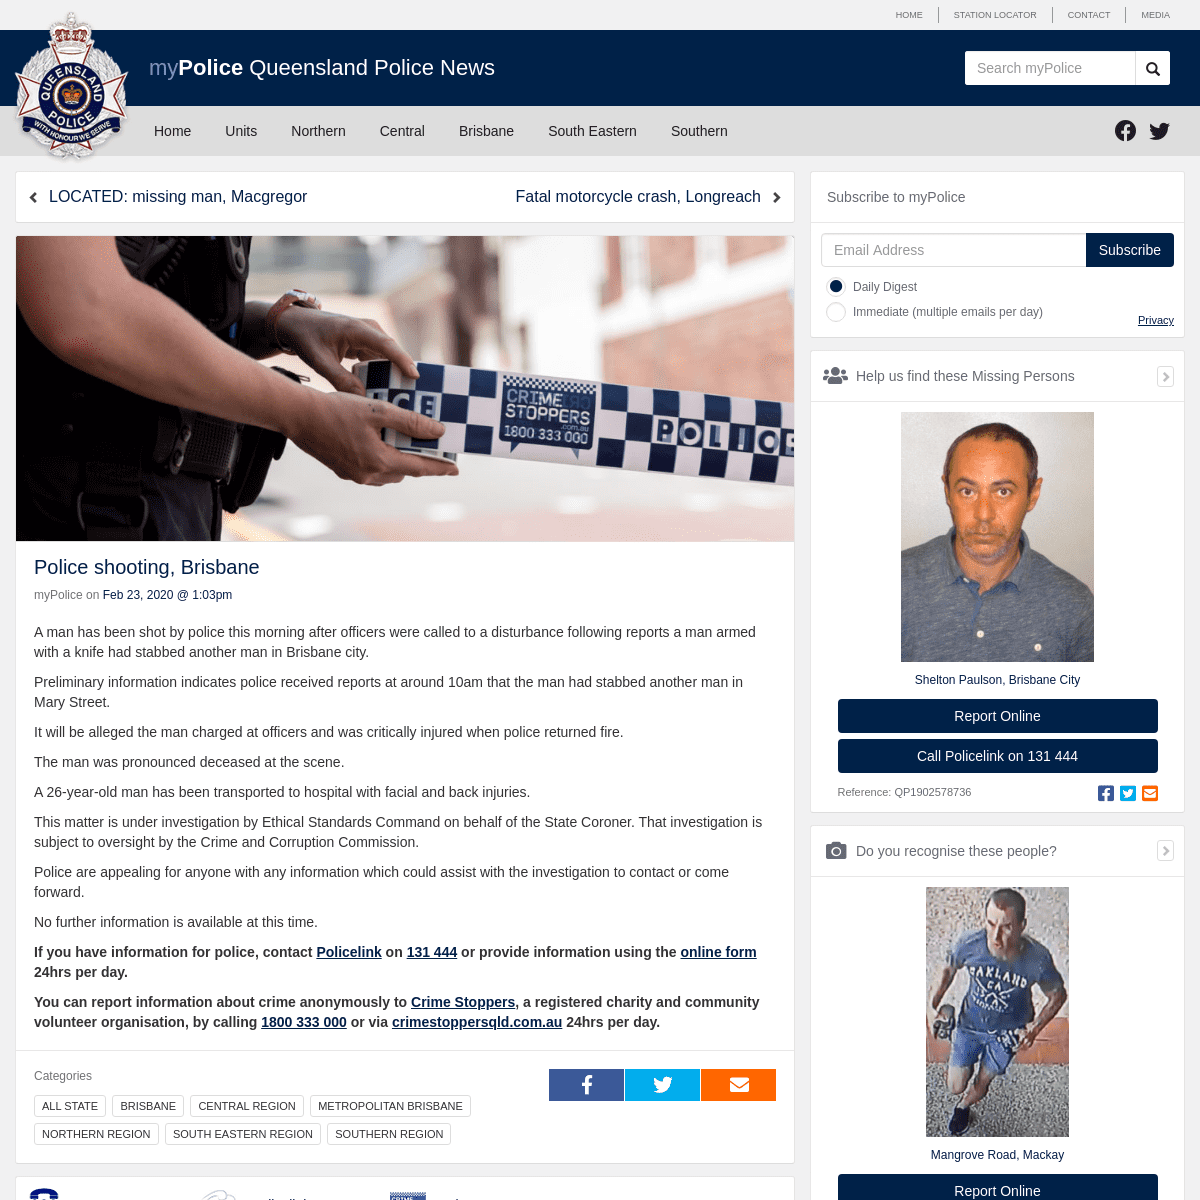 A complete backup of mypolice.qld.gov.au/news/2020/02/23/police-shooting-brisbane/